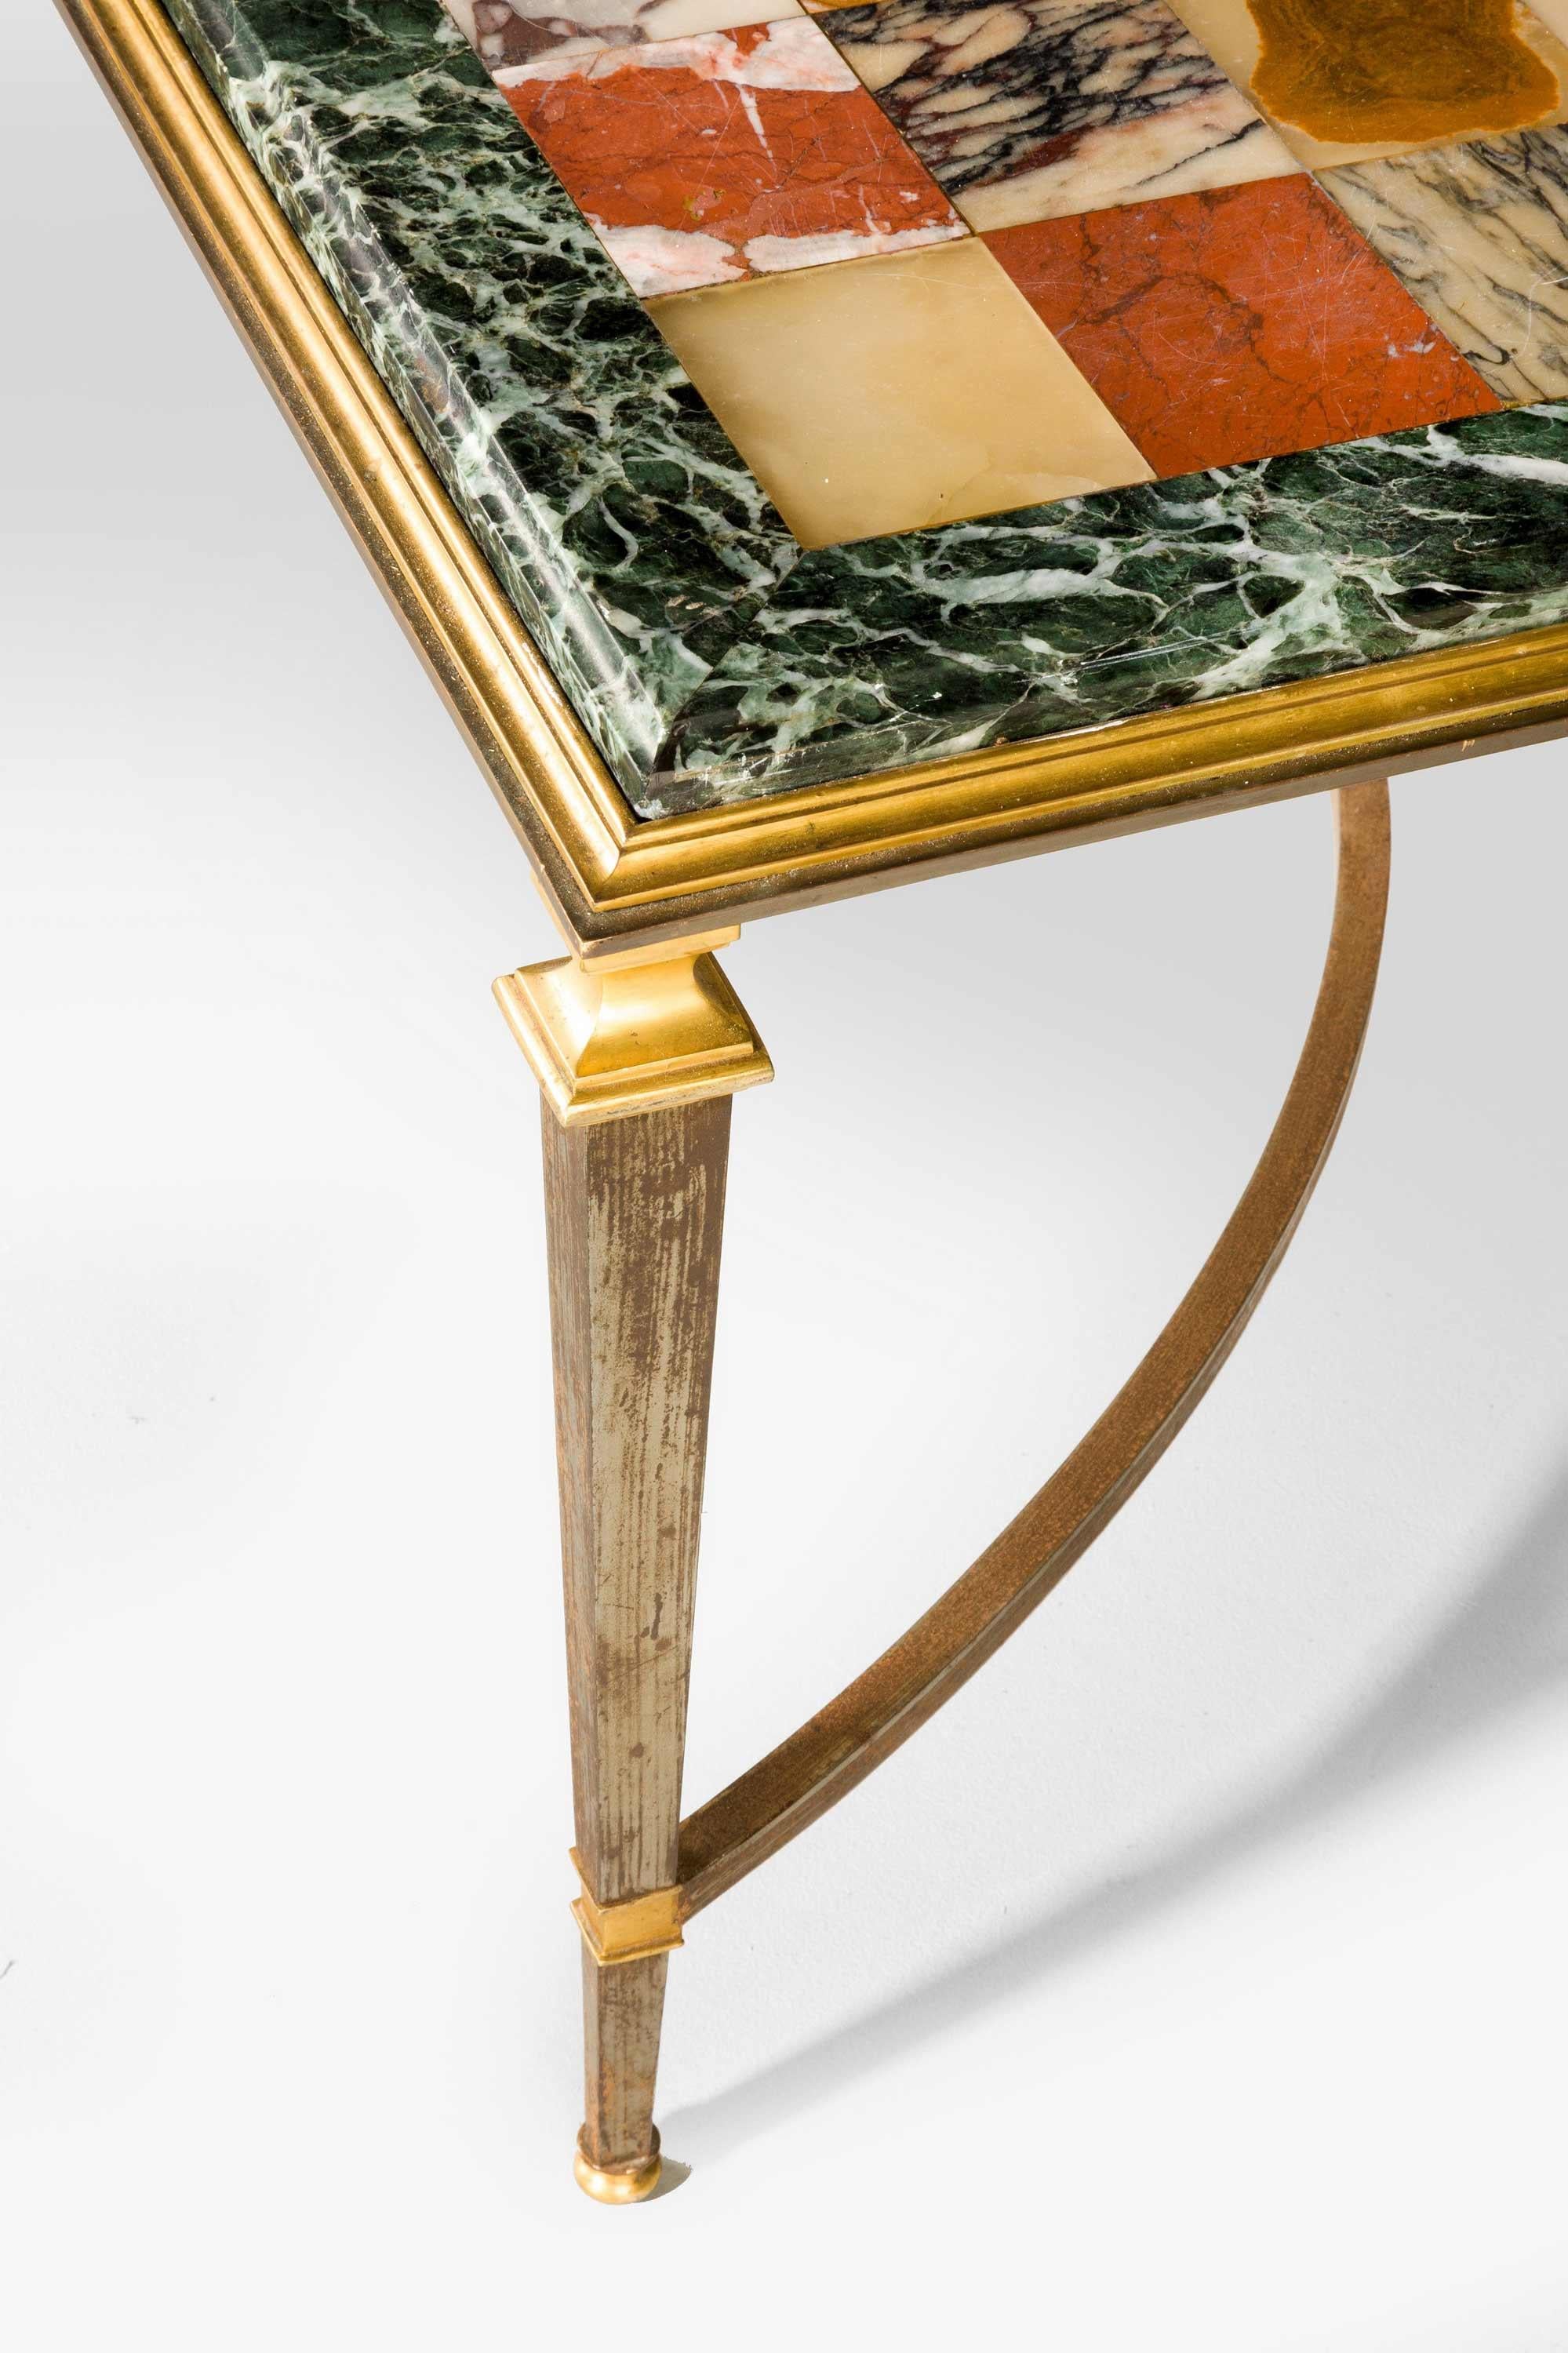 Metalwork Fine Italian Specimen Marble-Top Table